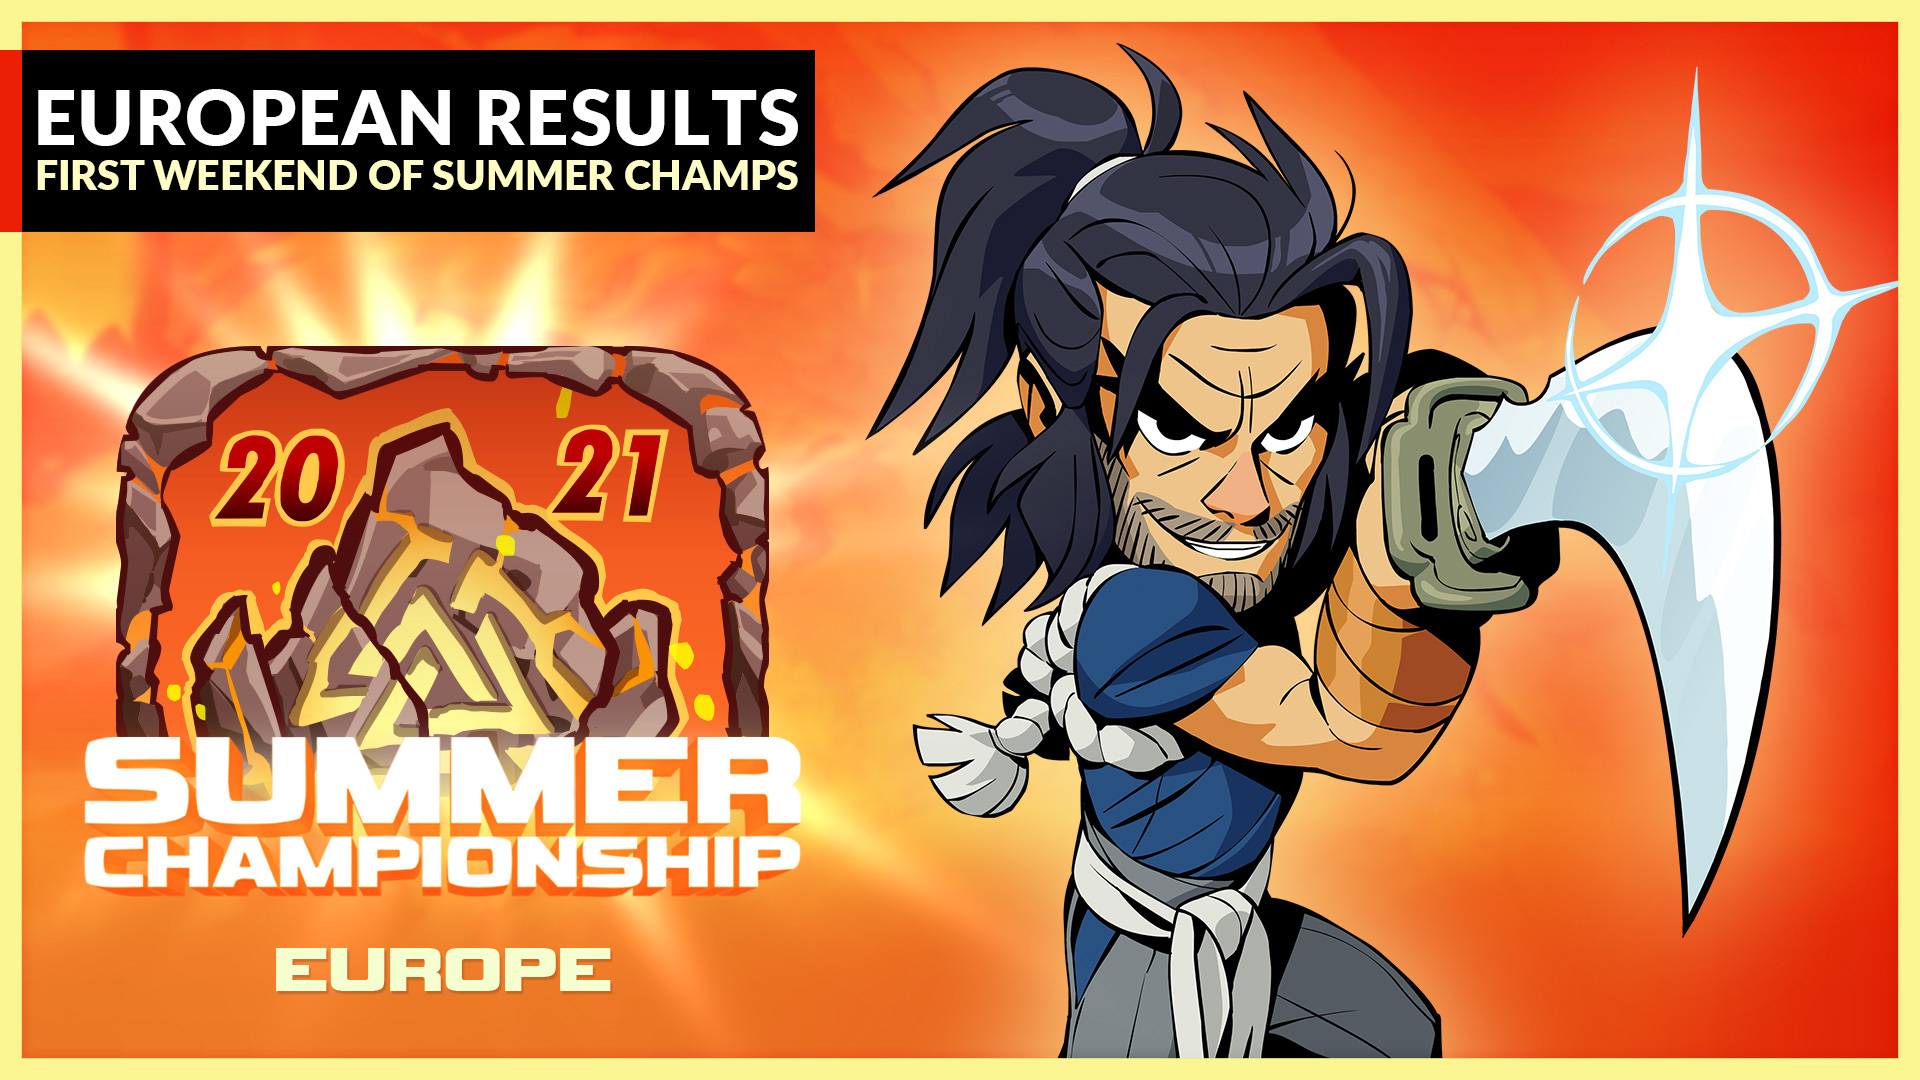 Acno wins the European Summer Championship 2021!